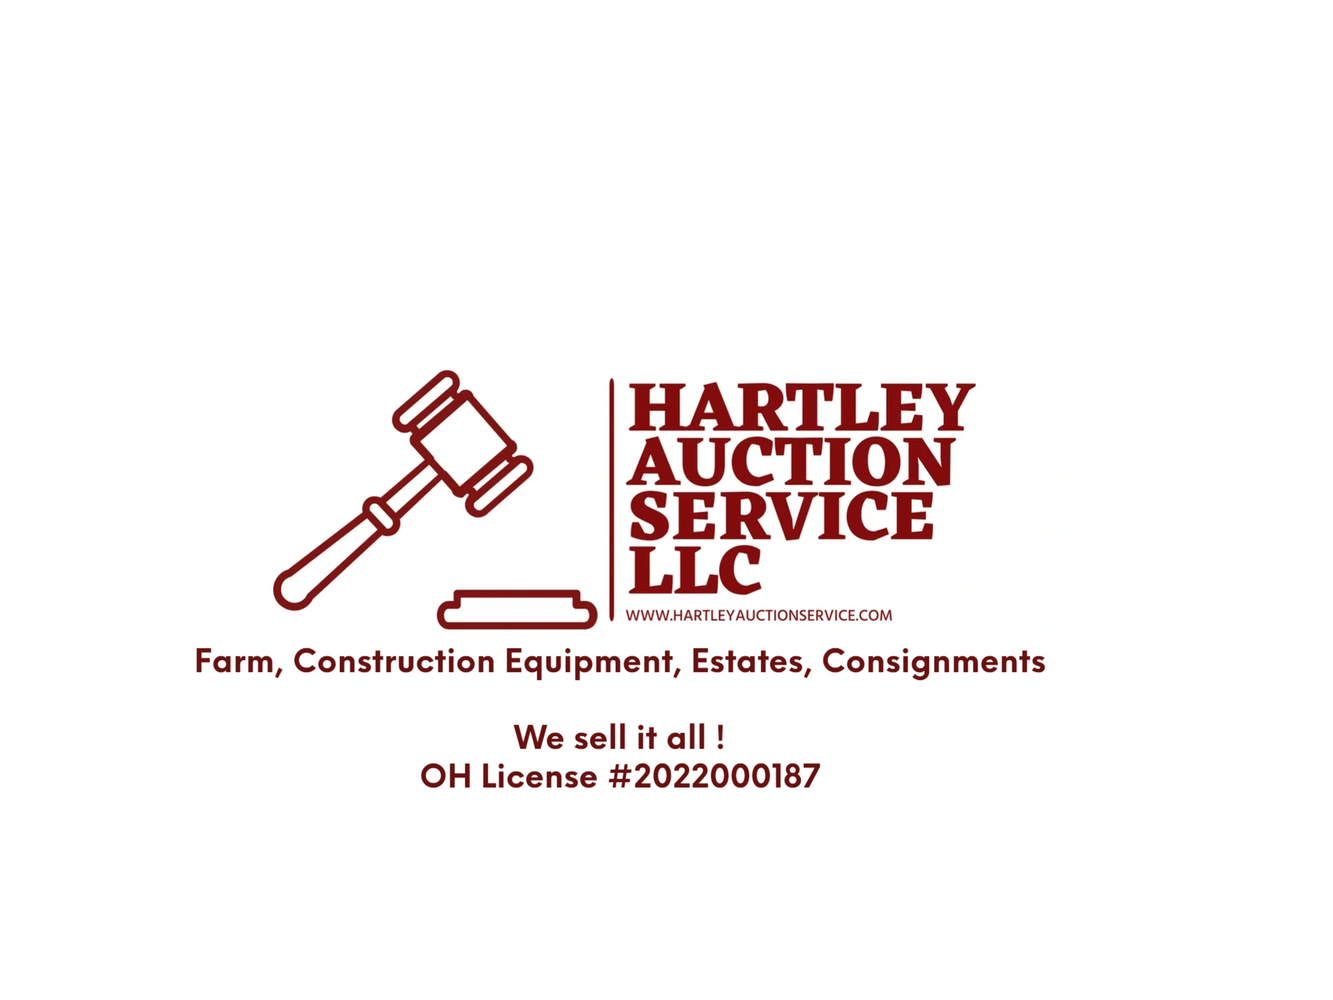 HARTLEY AUCTION SERVICE LLC